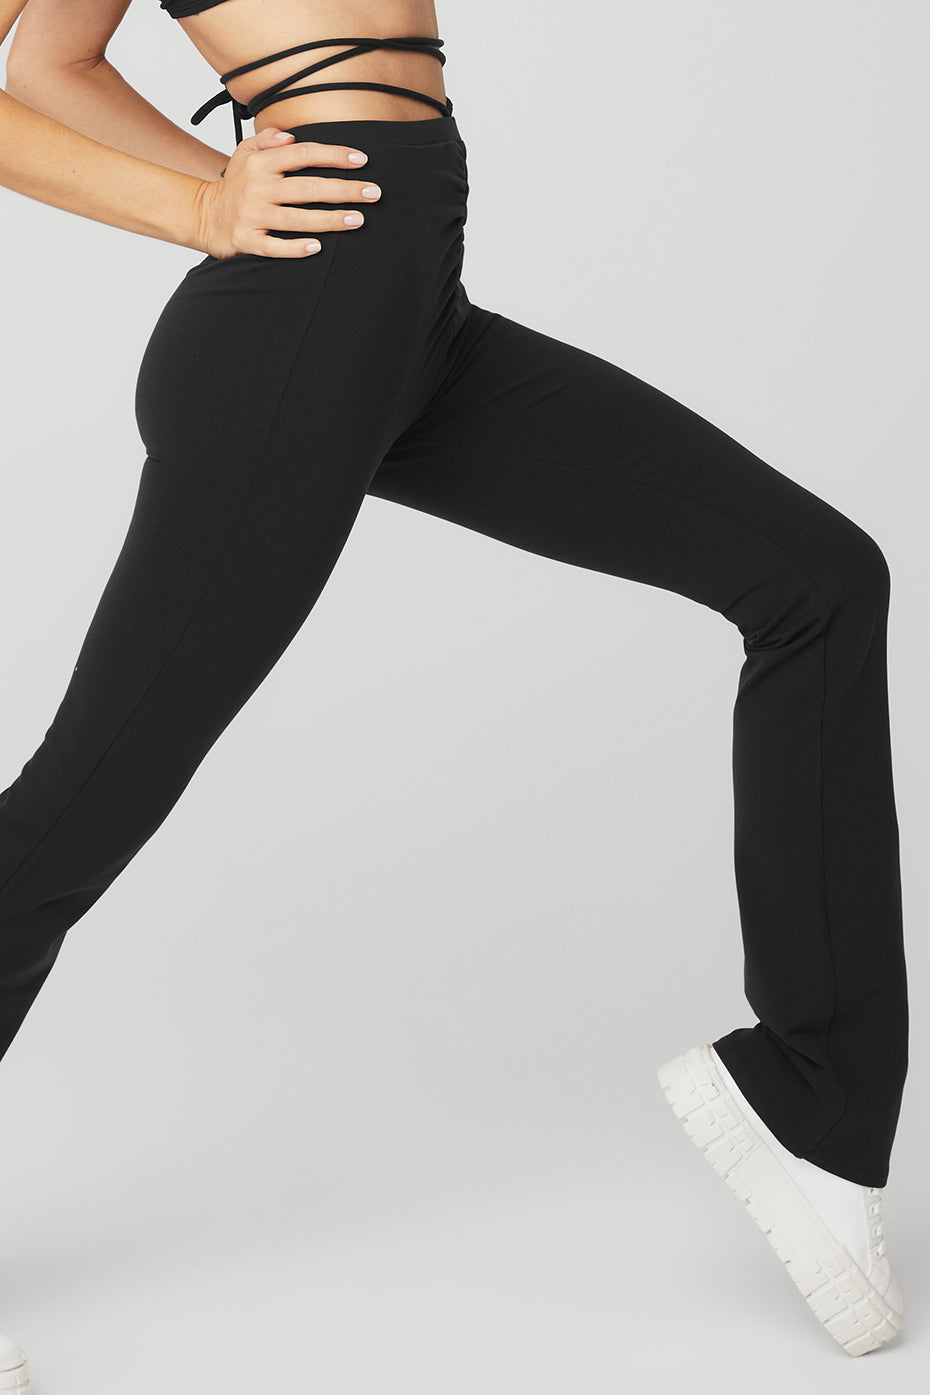 Alo Yoga SMALL Airbrush High-Waist Cinch Flare Legging - Black